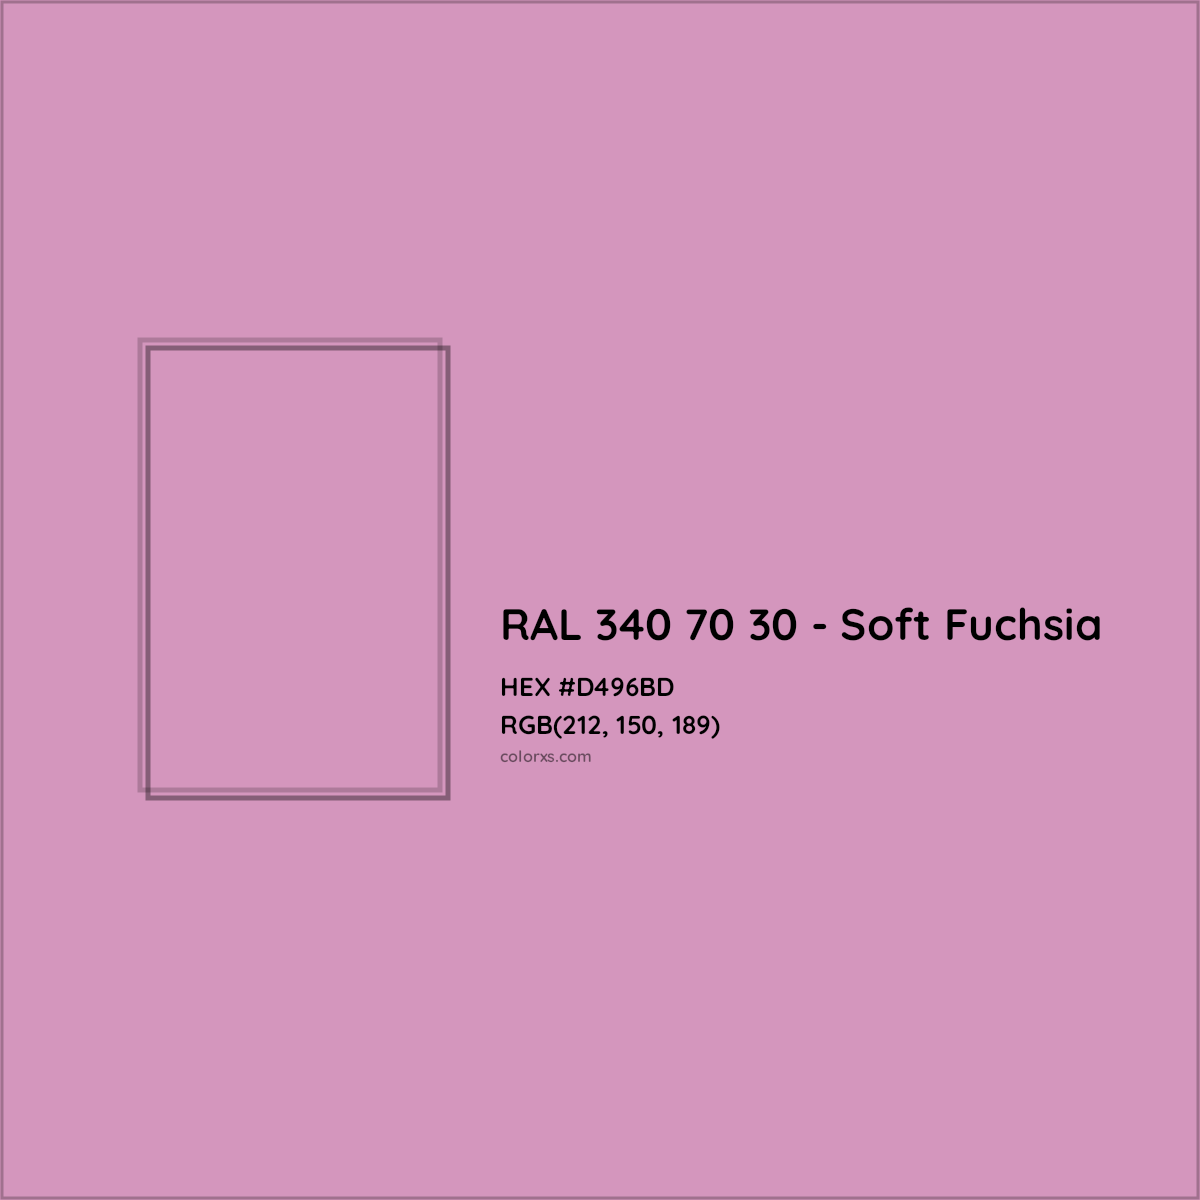 HEX #D496BD RAL 340 70 30 - Soft Fuchsia CMS RAL Design - Color Code